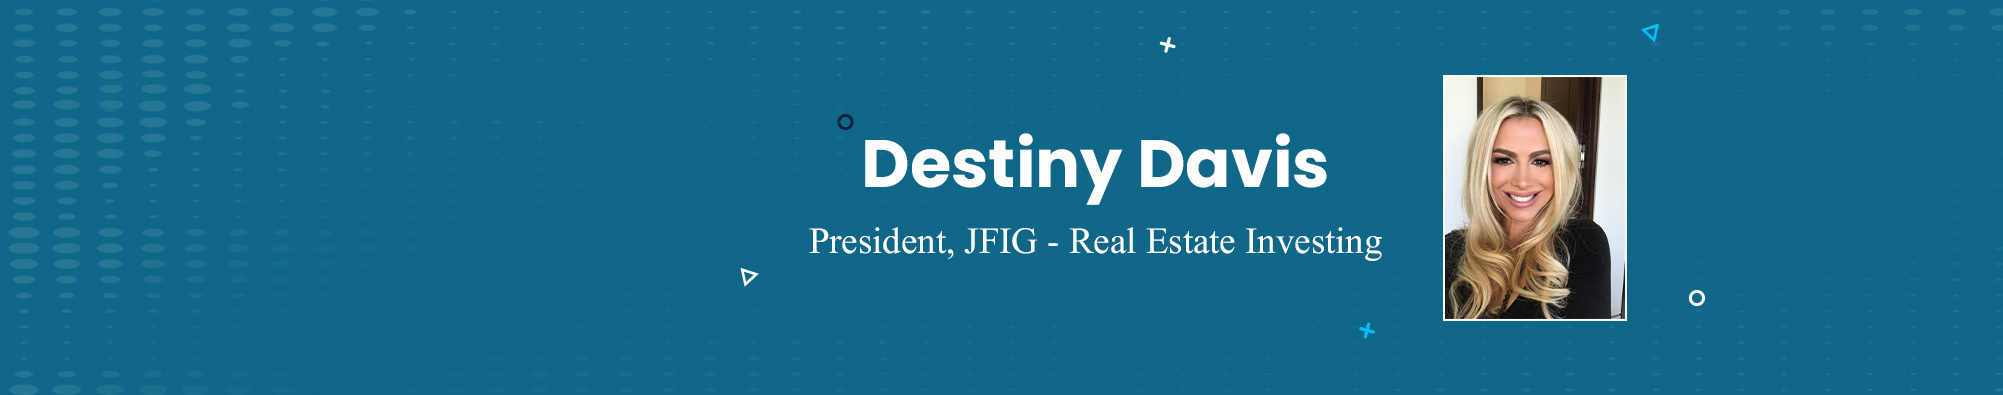 Destiny Davis's profile banner